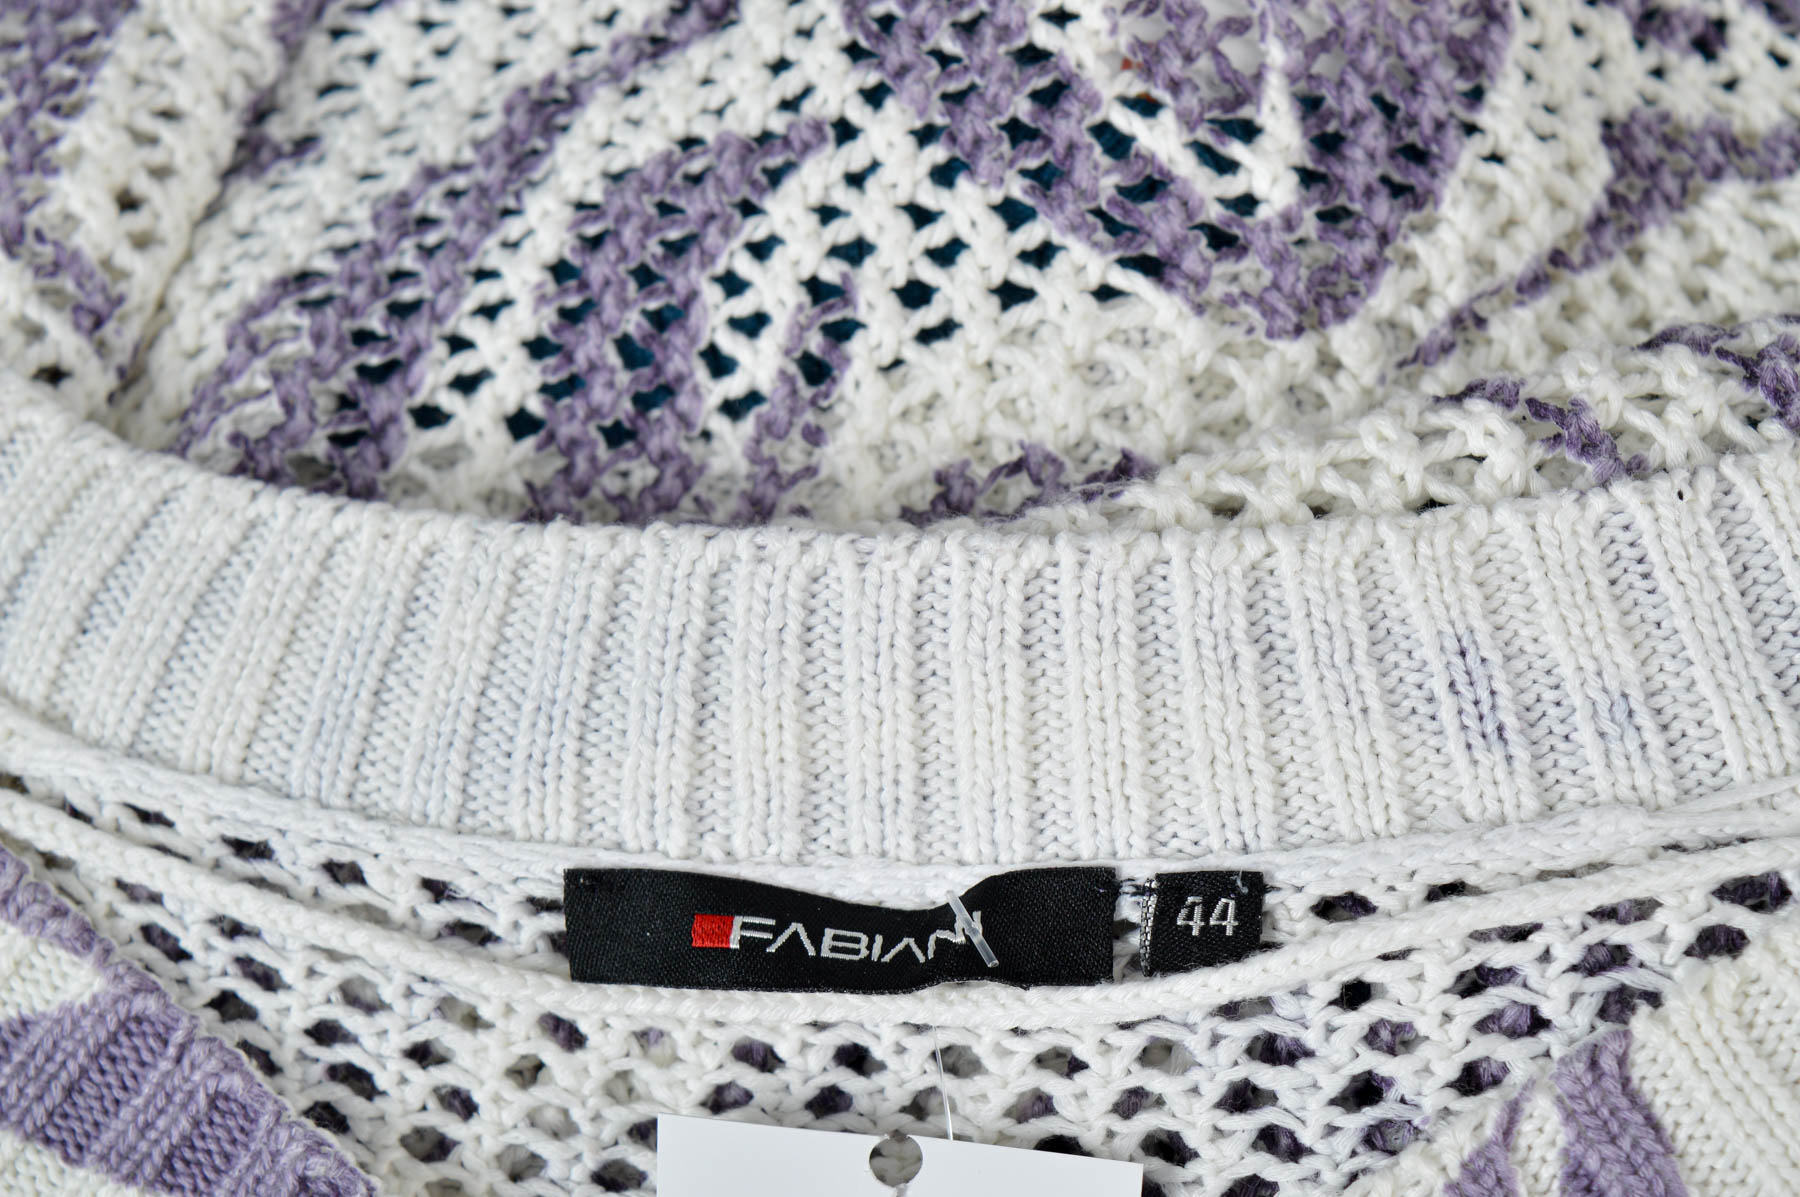 Women's sweater - Fabiani - 2